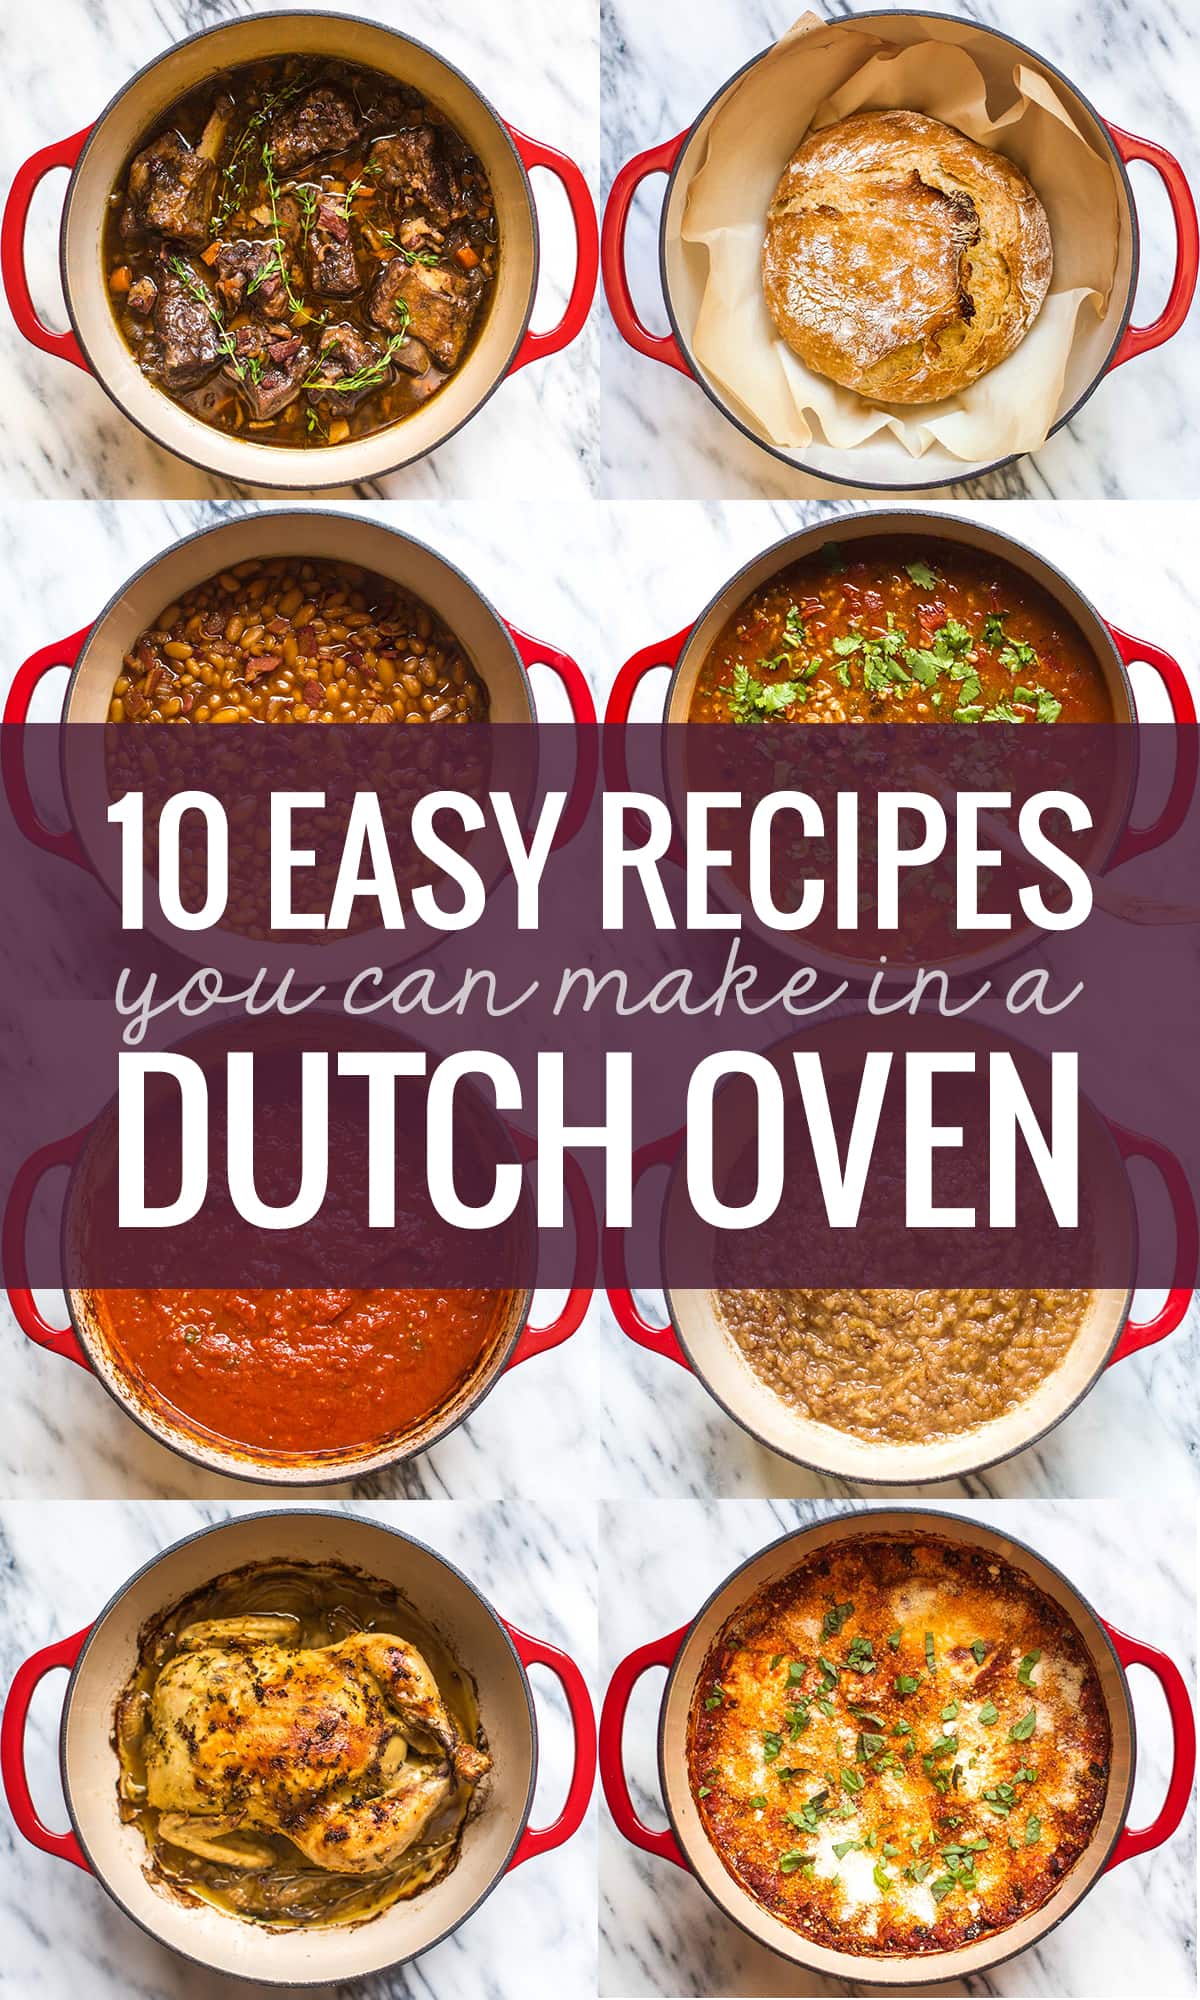 Easy-Recipes-Dutch-Oven.jpg